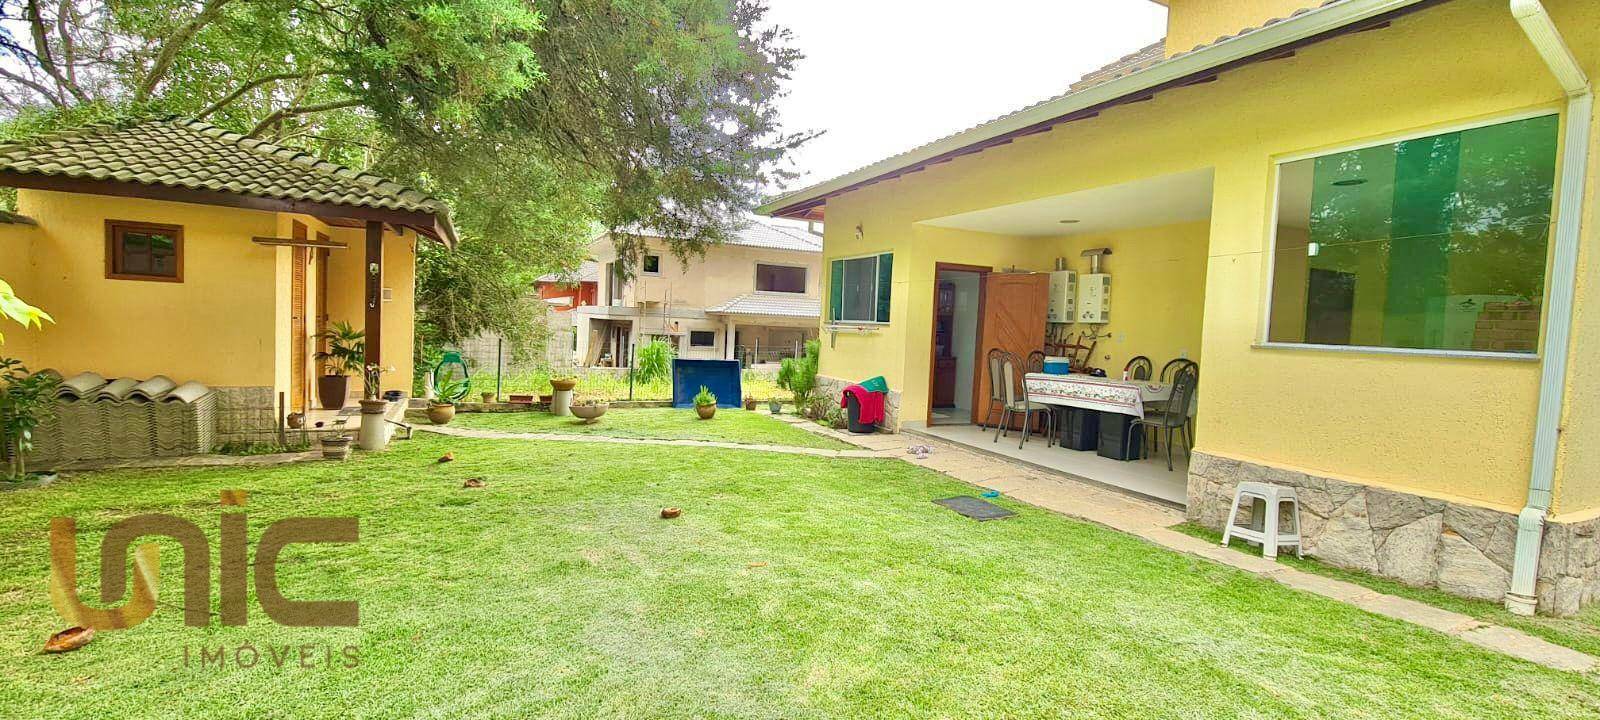 Casa à venda em Vargem Grande, Teresópolis - RJ - Foto 13